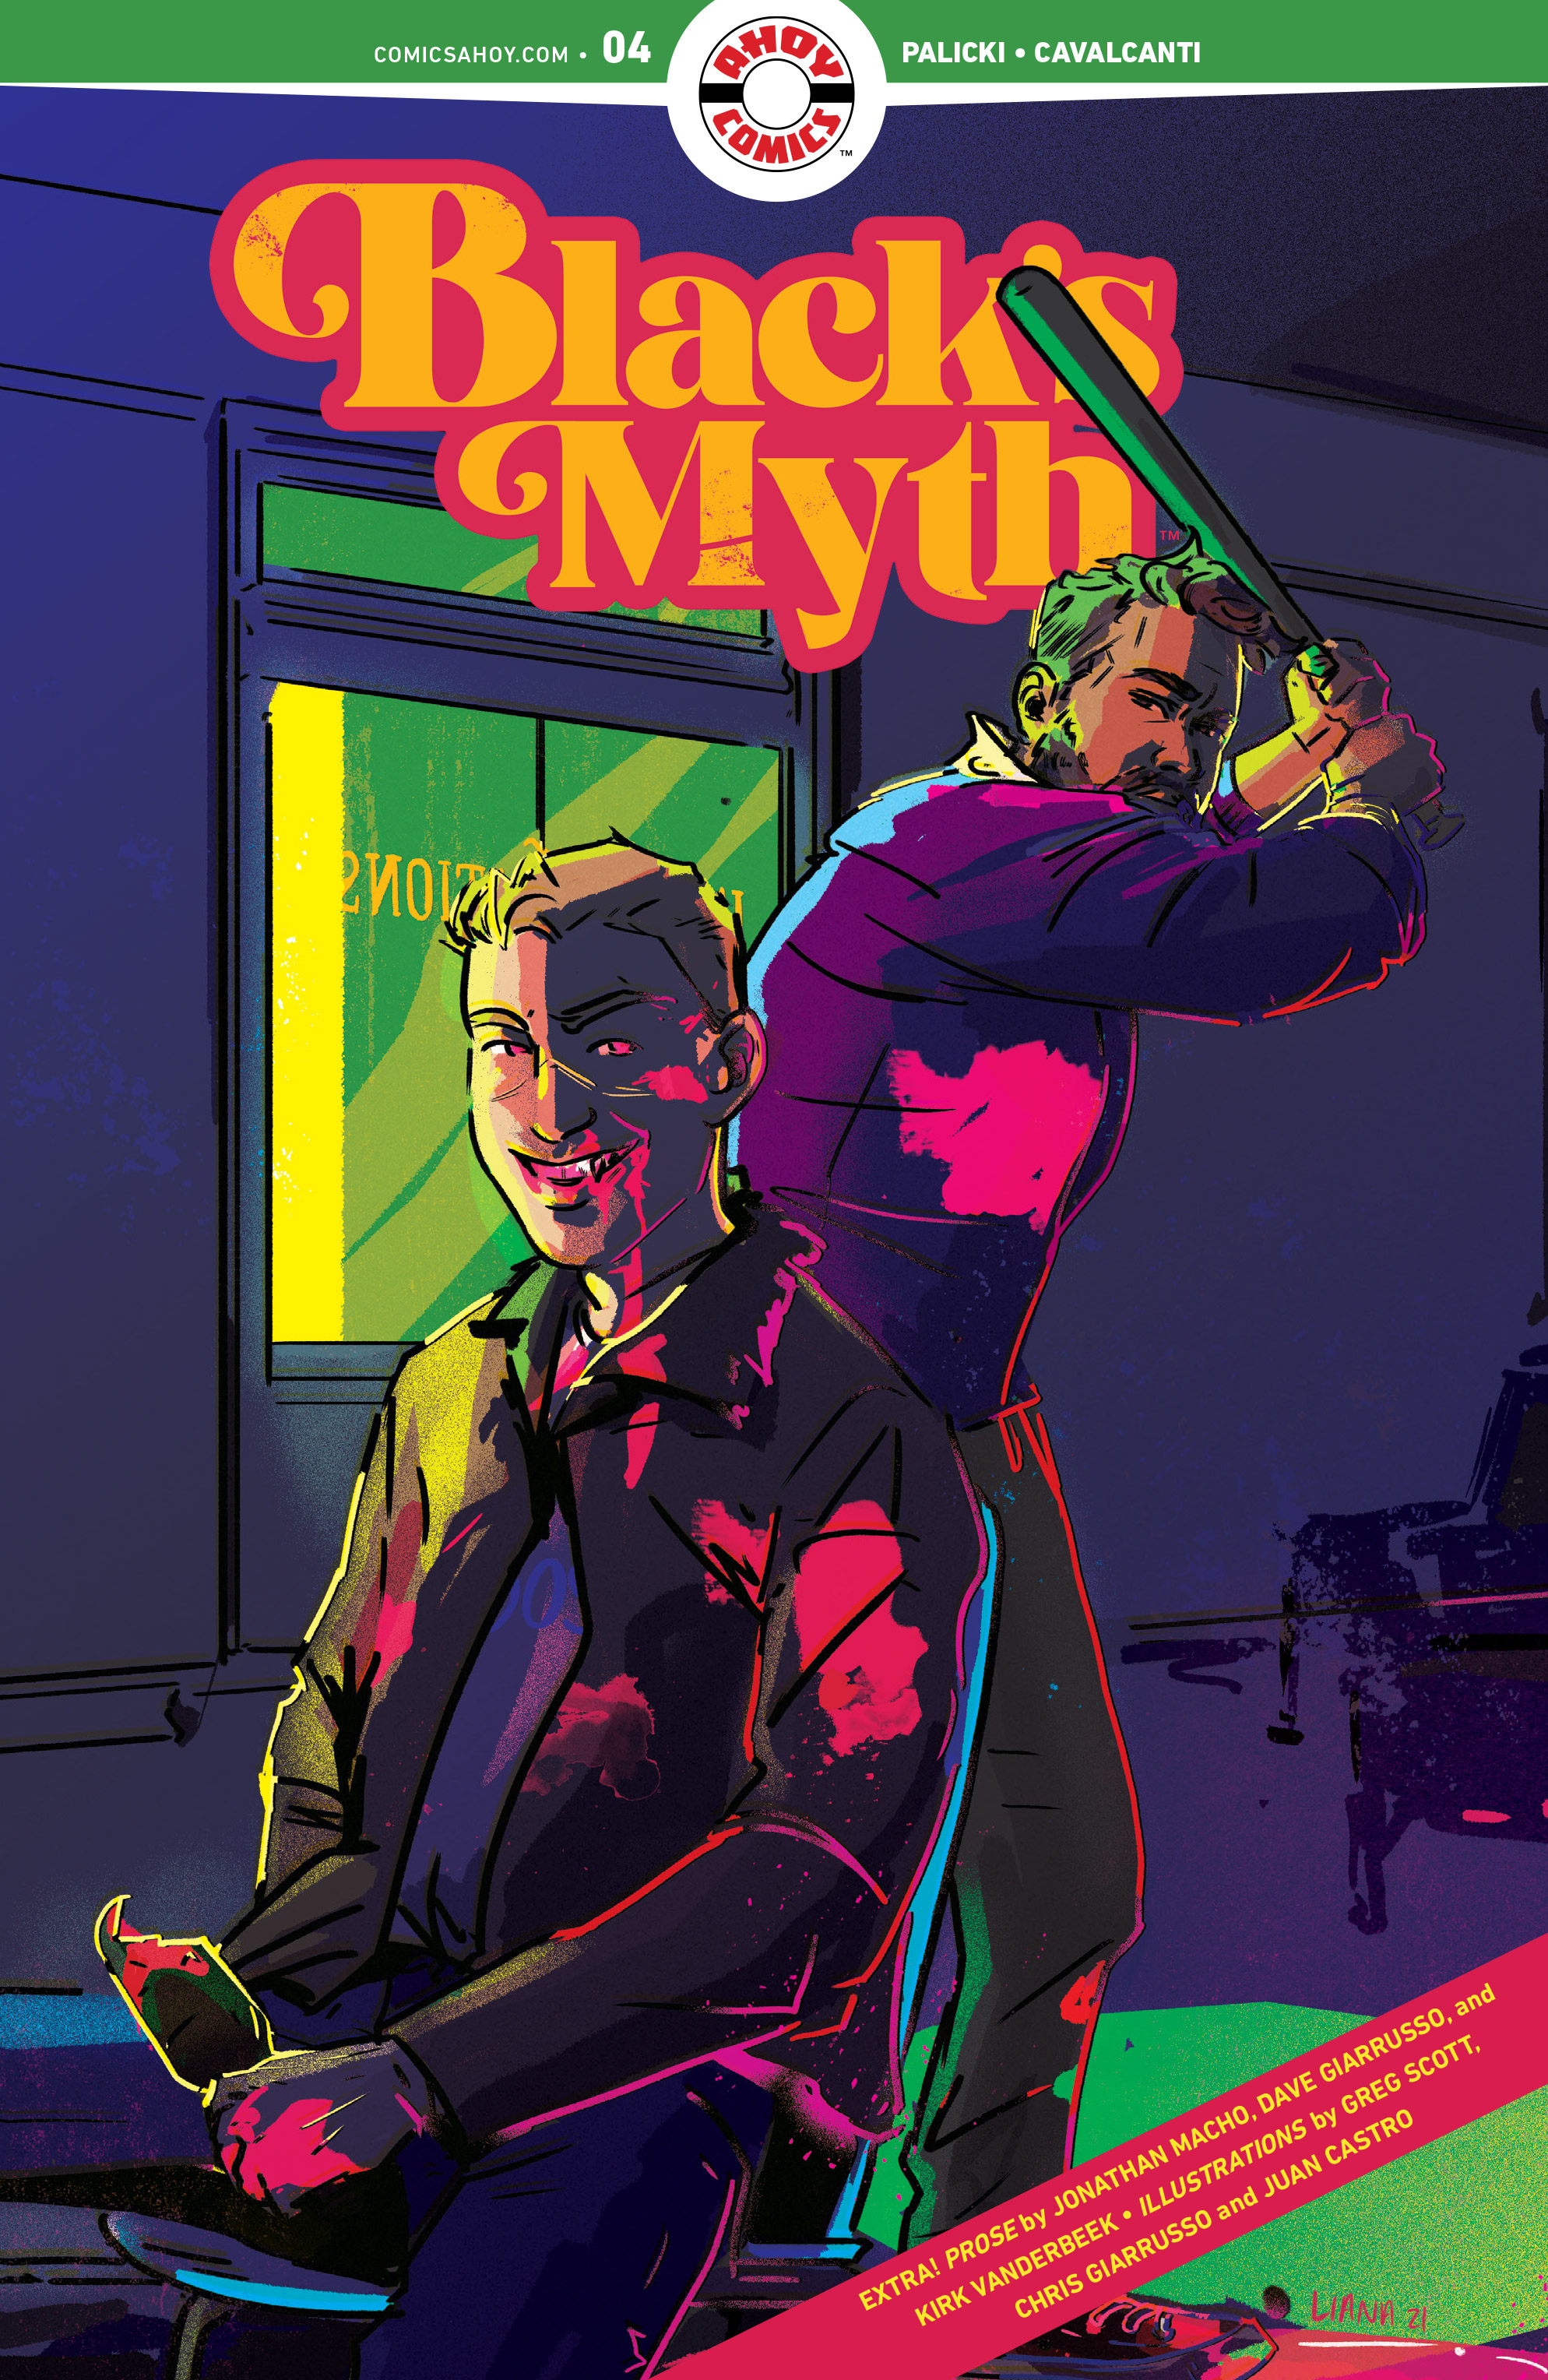 Black's Myth (2021-): Chapter 4 - Page 1